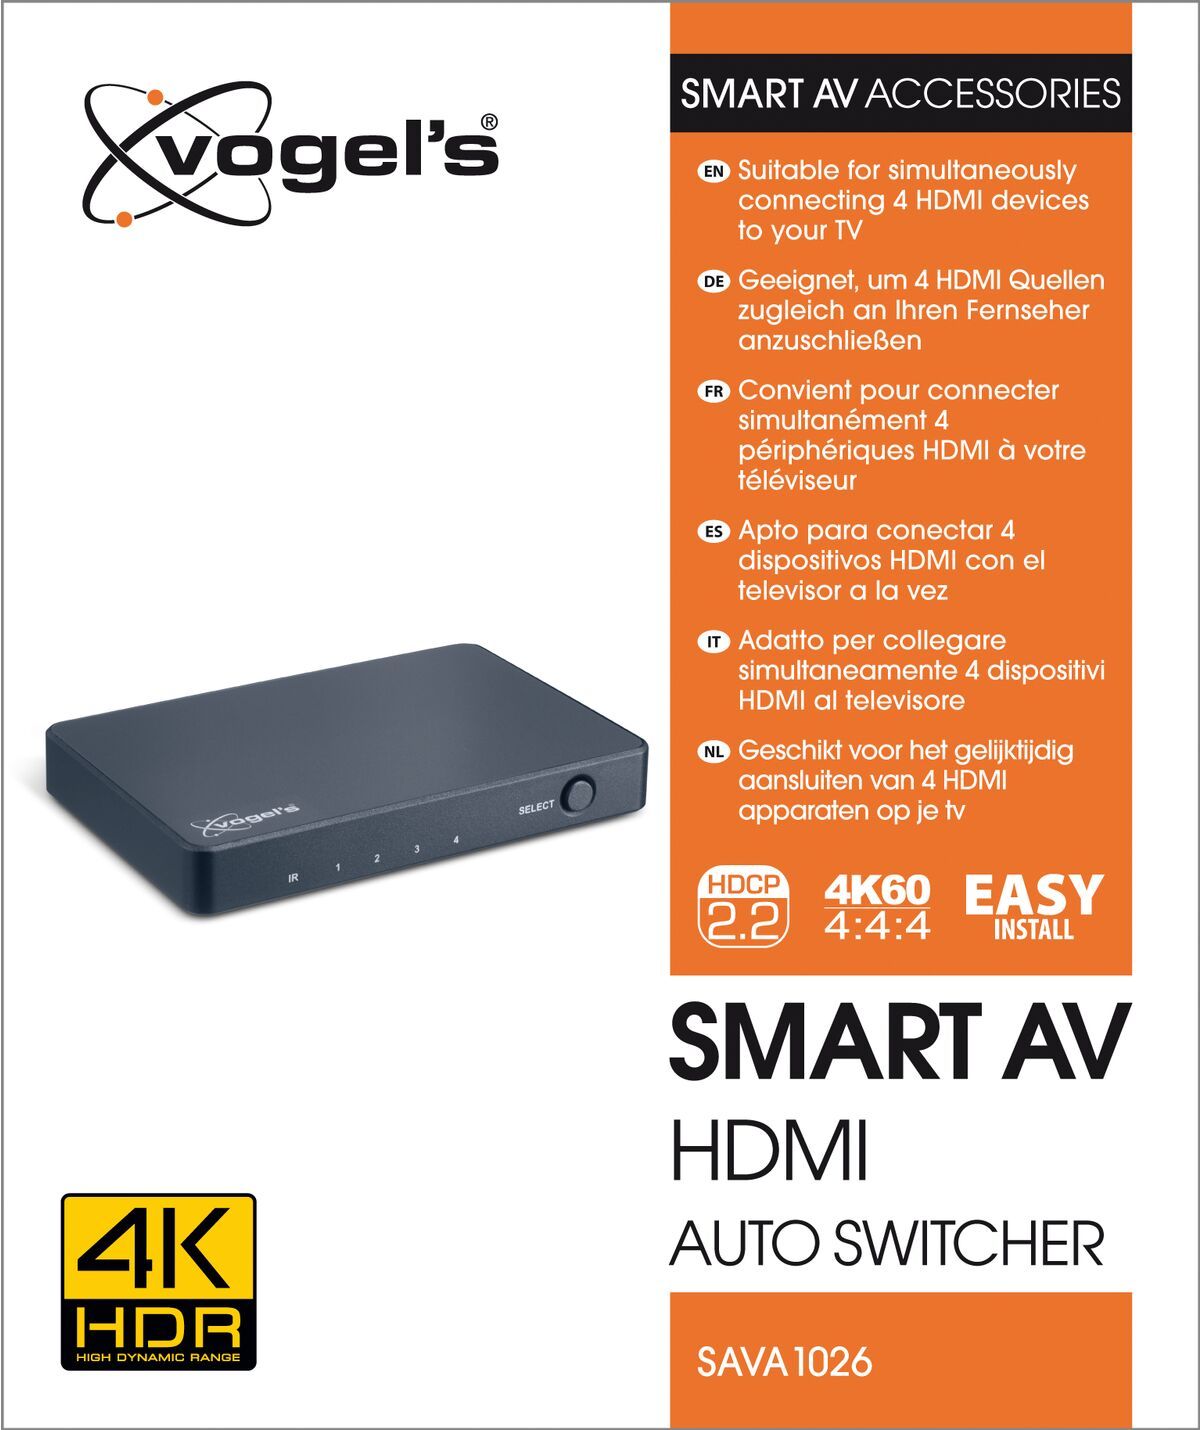 Vogel's SAVA 1026 Smart AV HDMI auto switcher - Packaging front